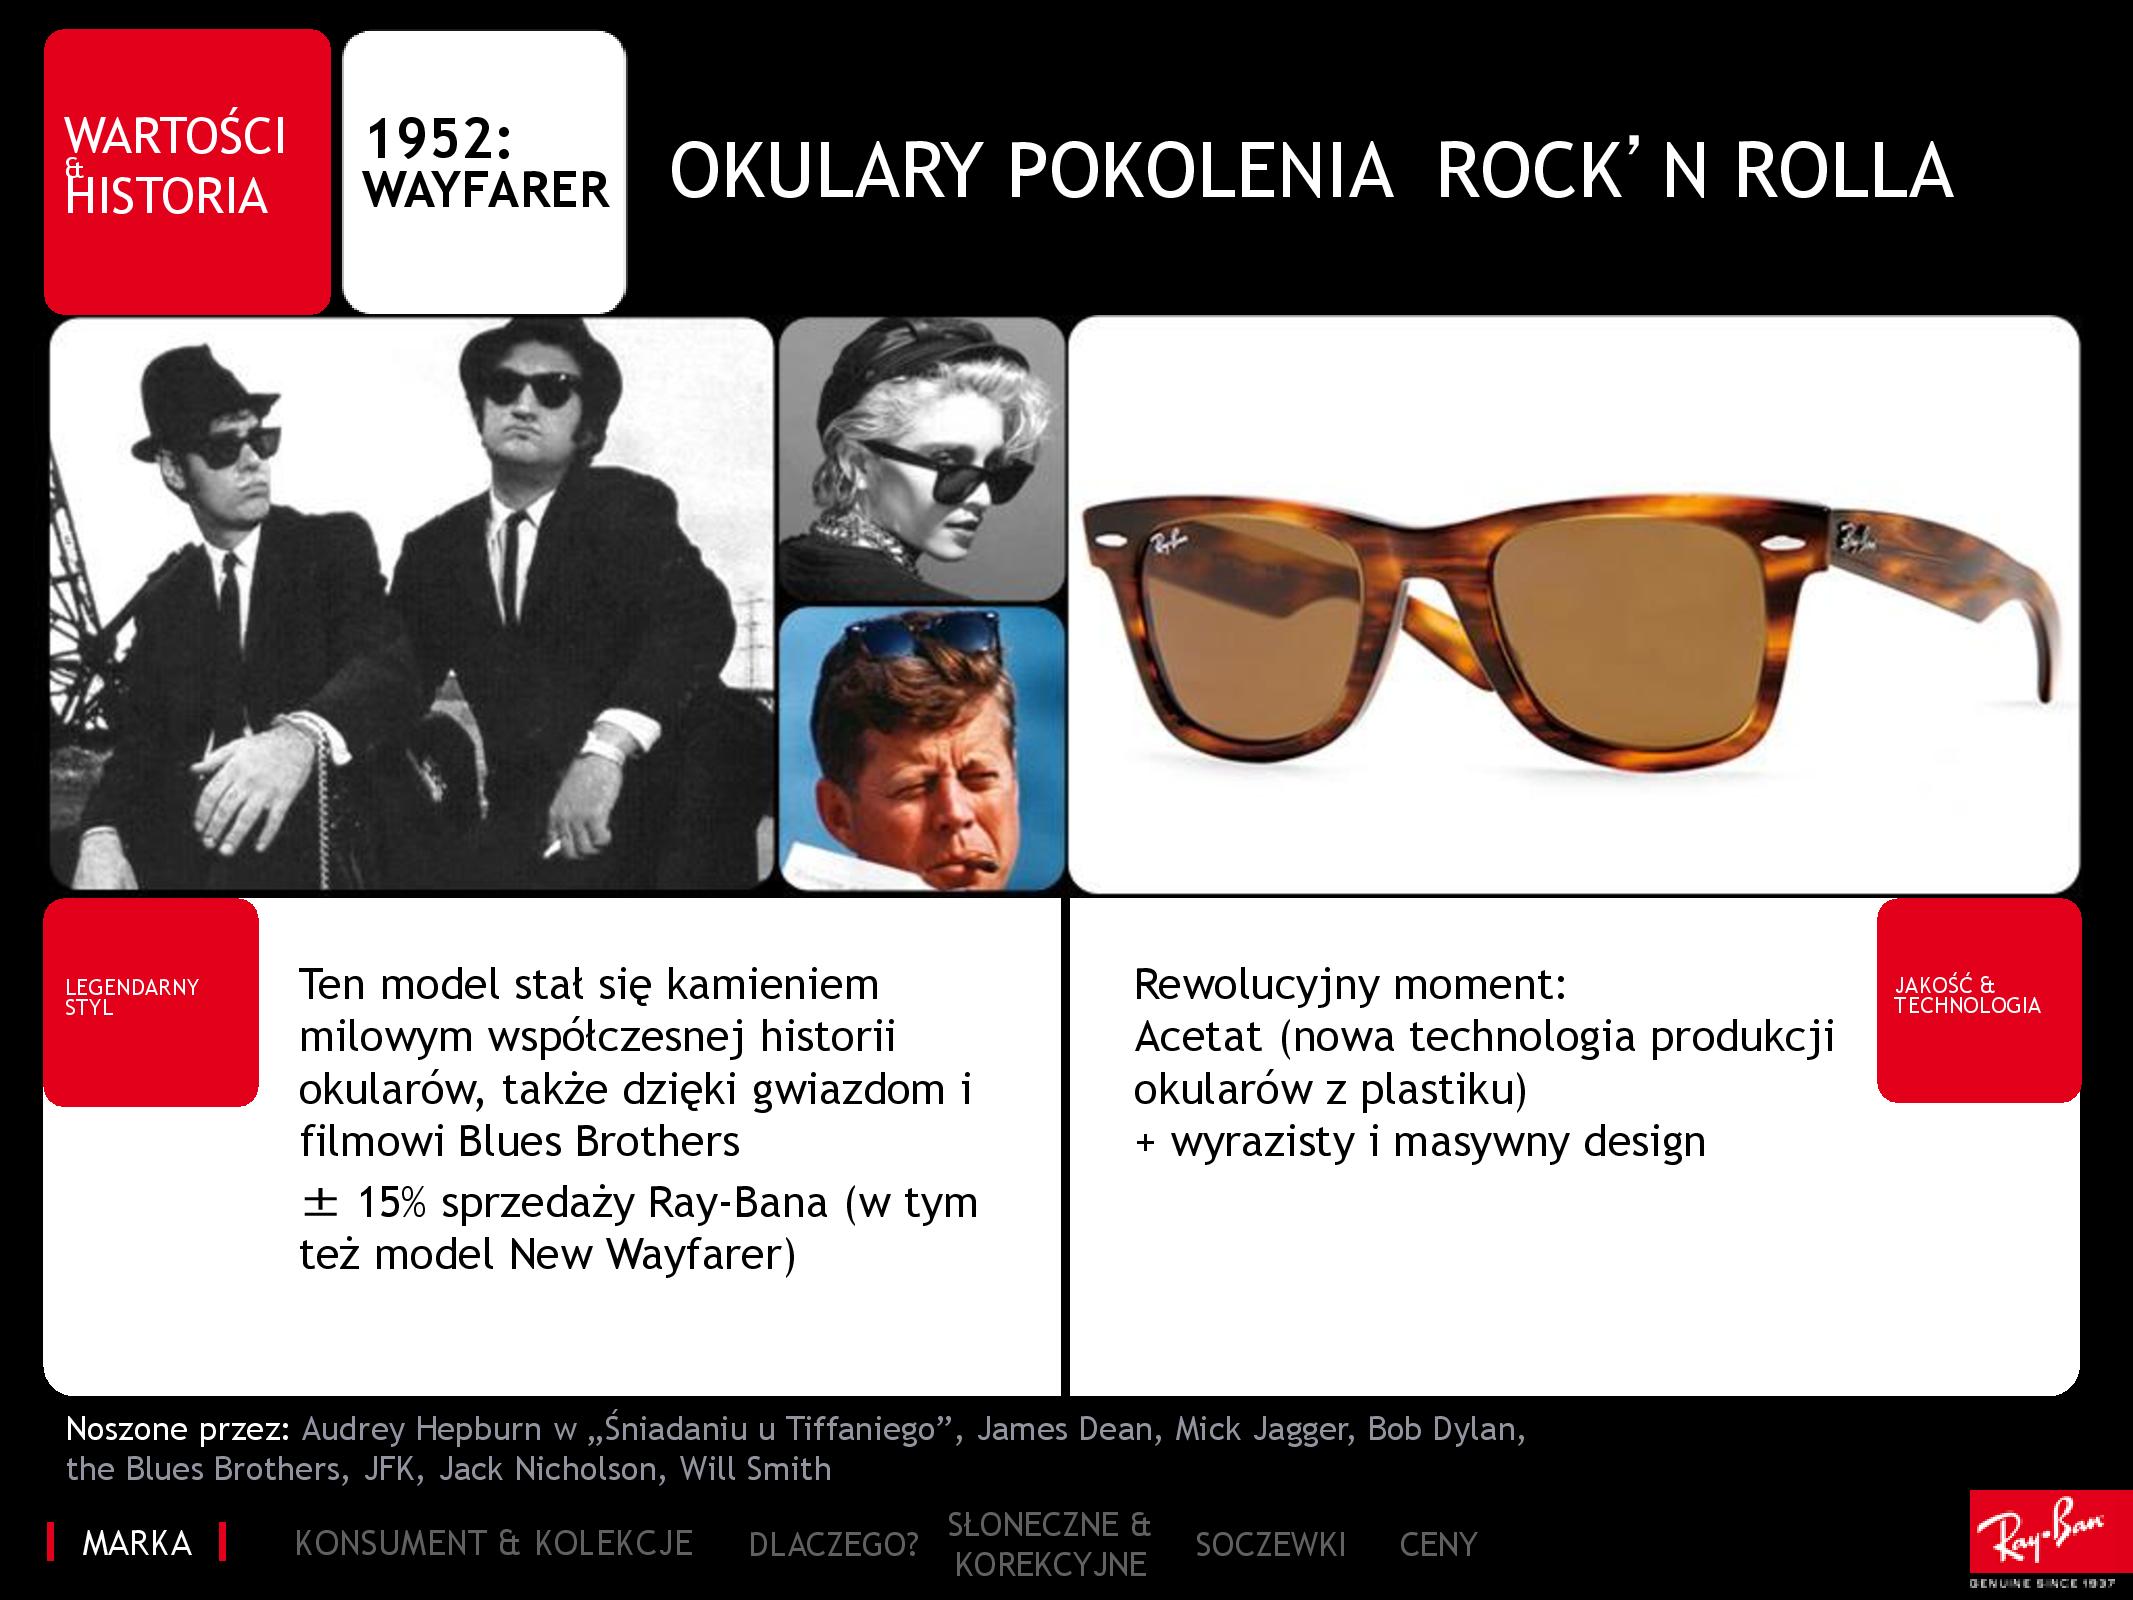 Okulary Pokolenia Rock'n Rolla - Wayfarer